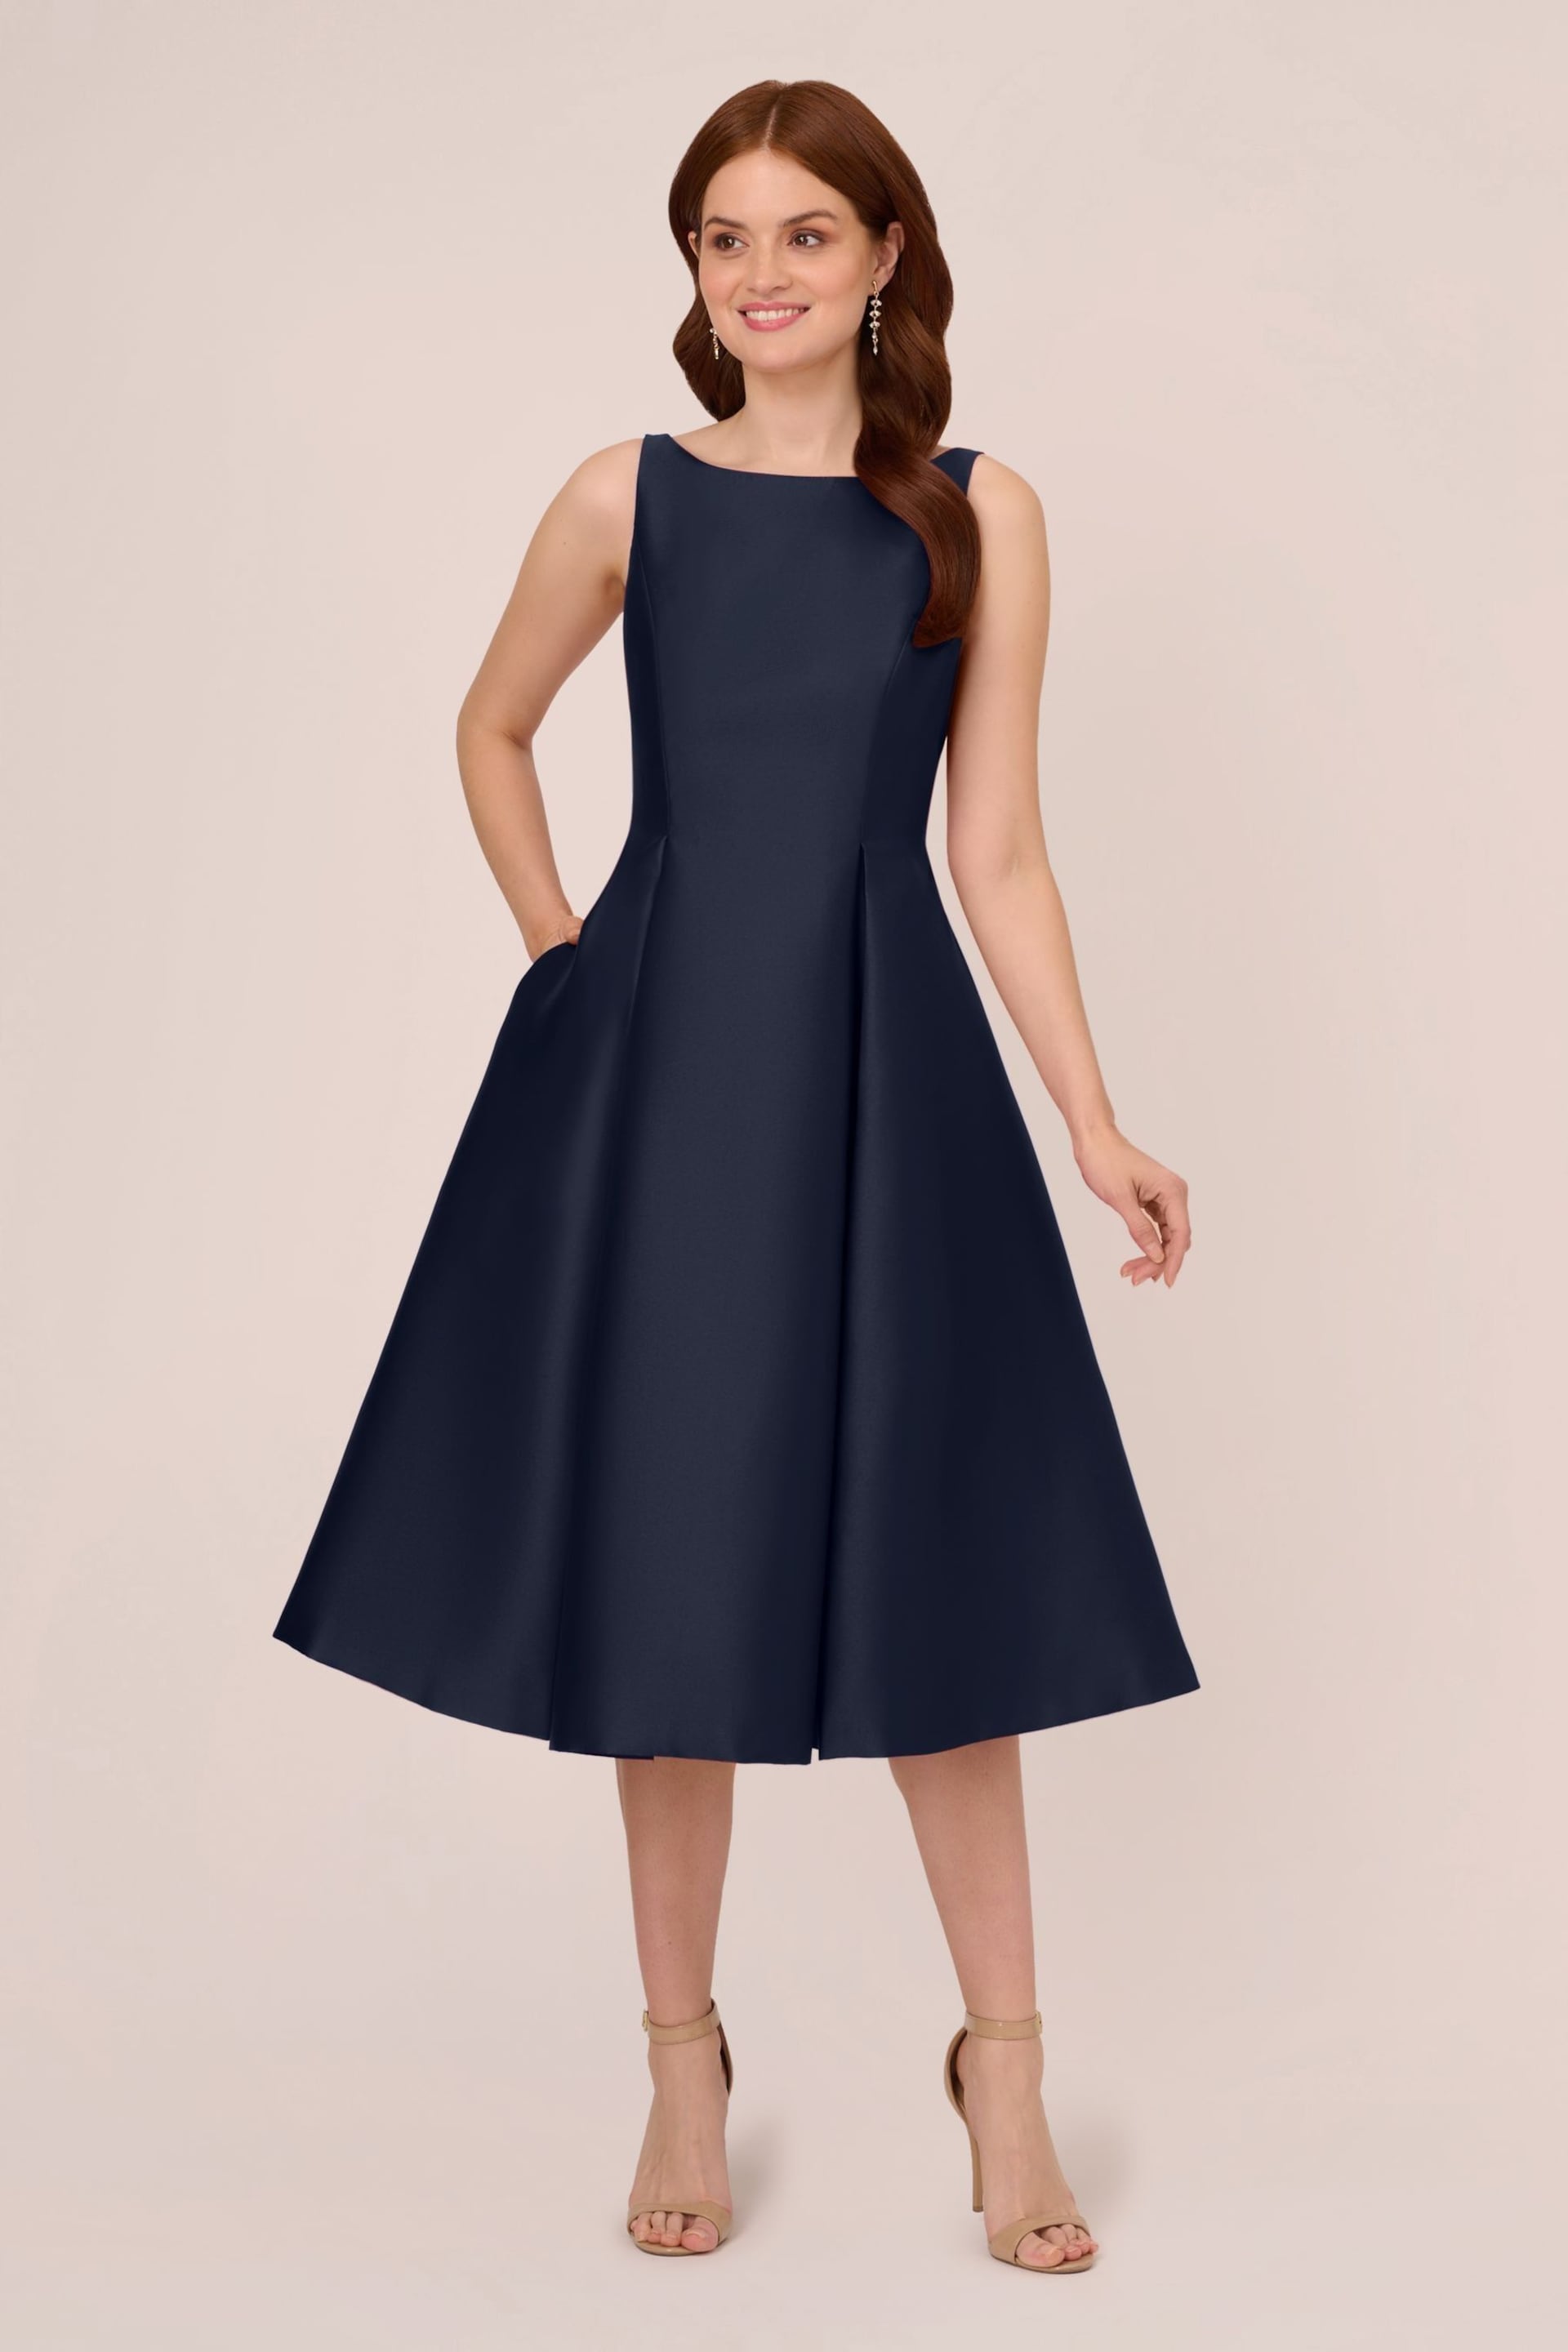 Adrianna Papell Blue Sleeveless Tea Length Dress - Image 1 of 6